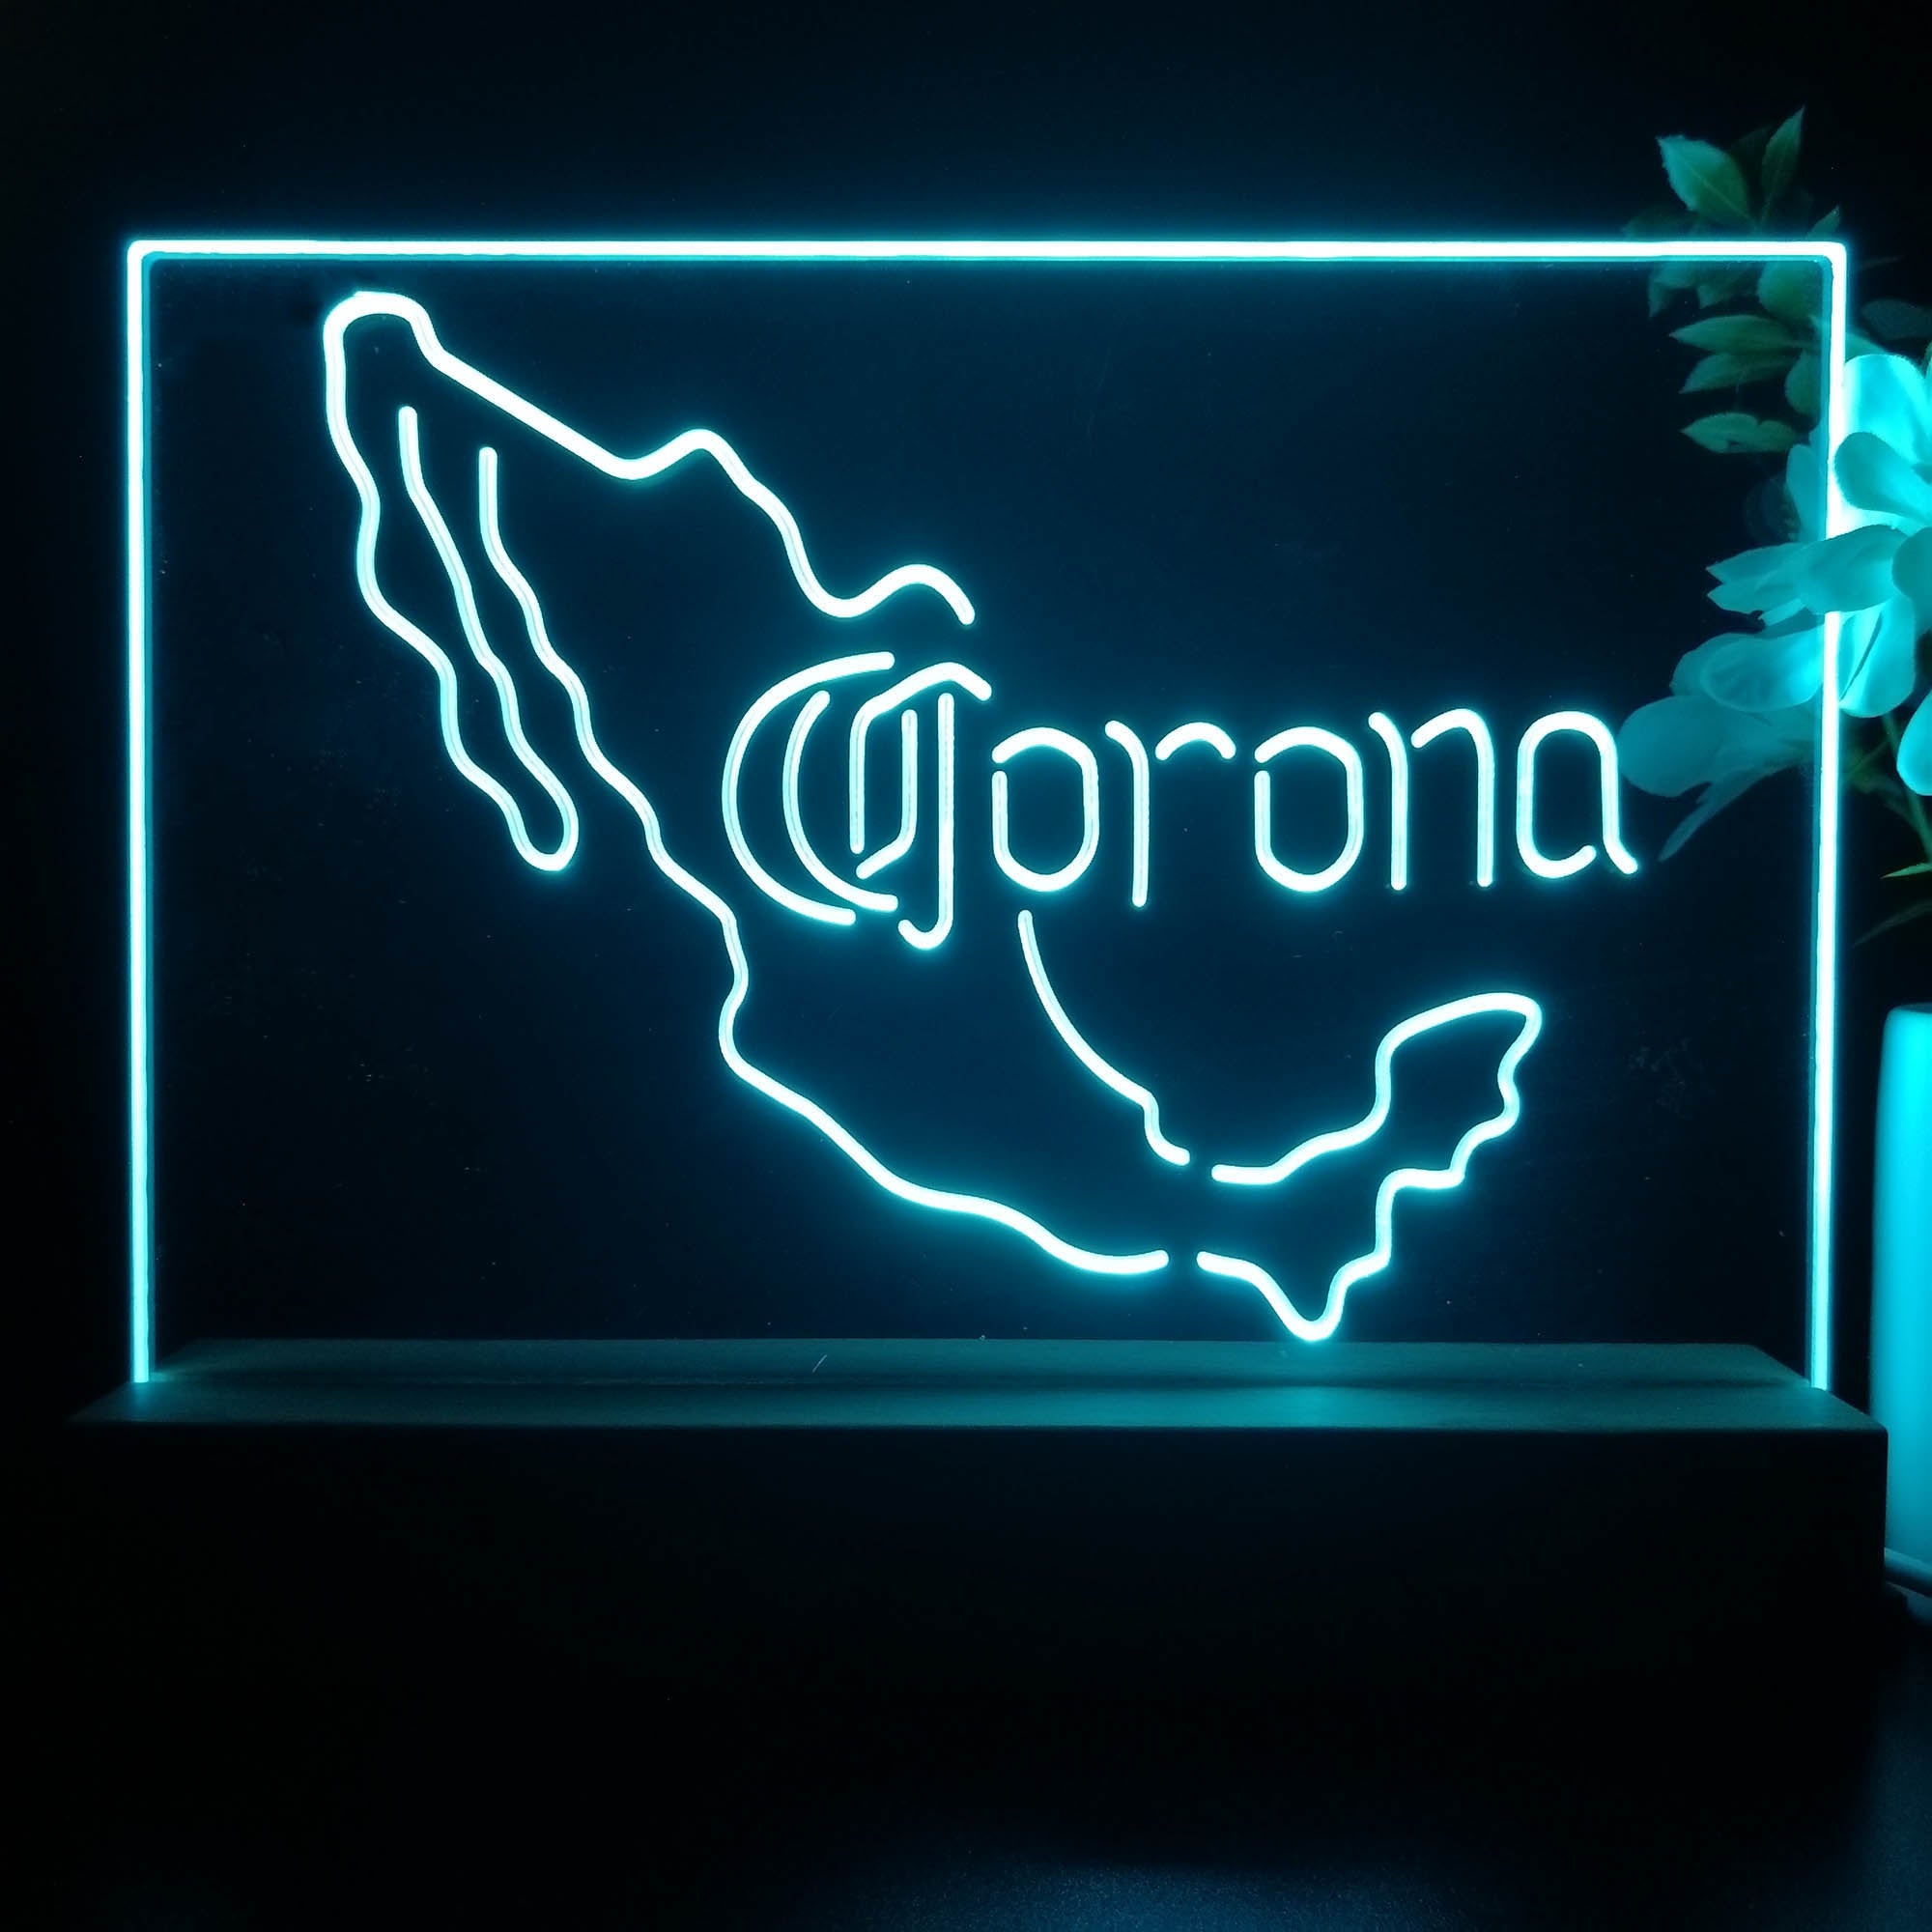 Corona Mexico Cerveza Neon Sign Pub Bar Lamp